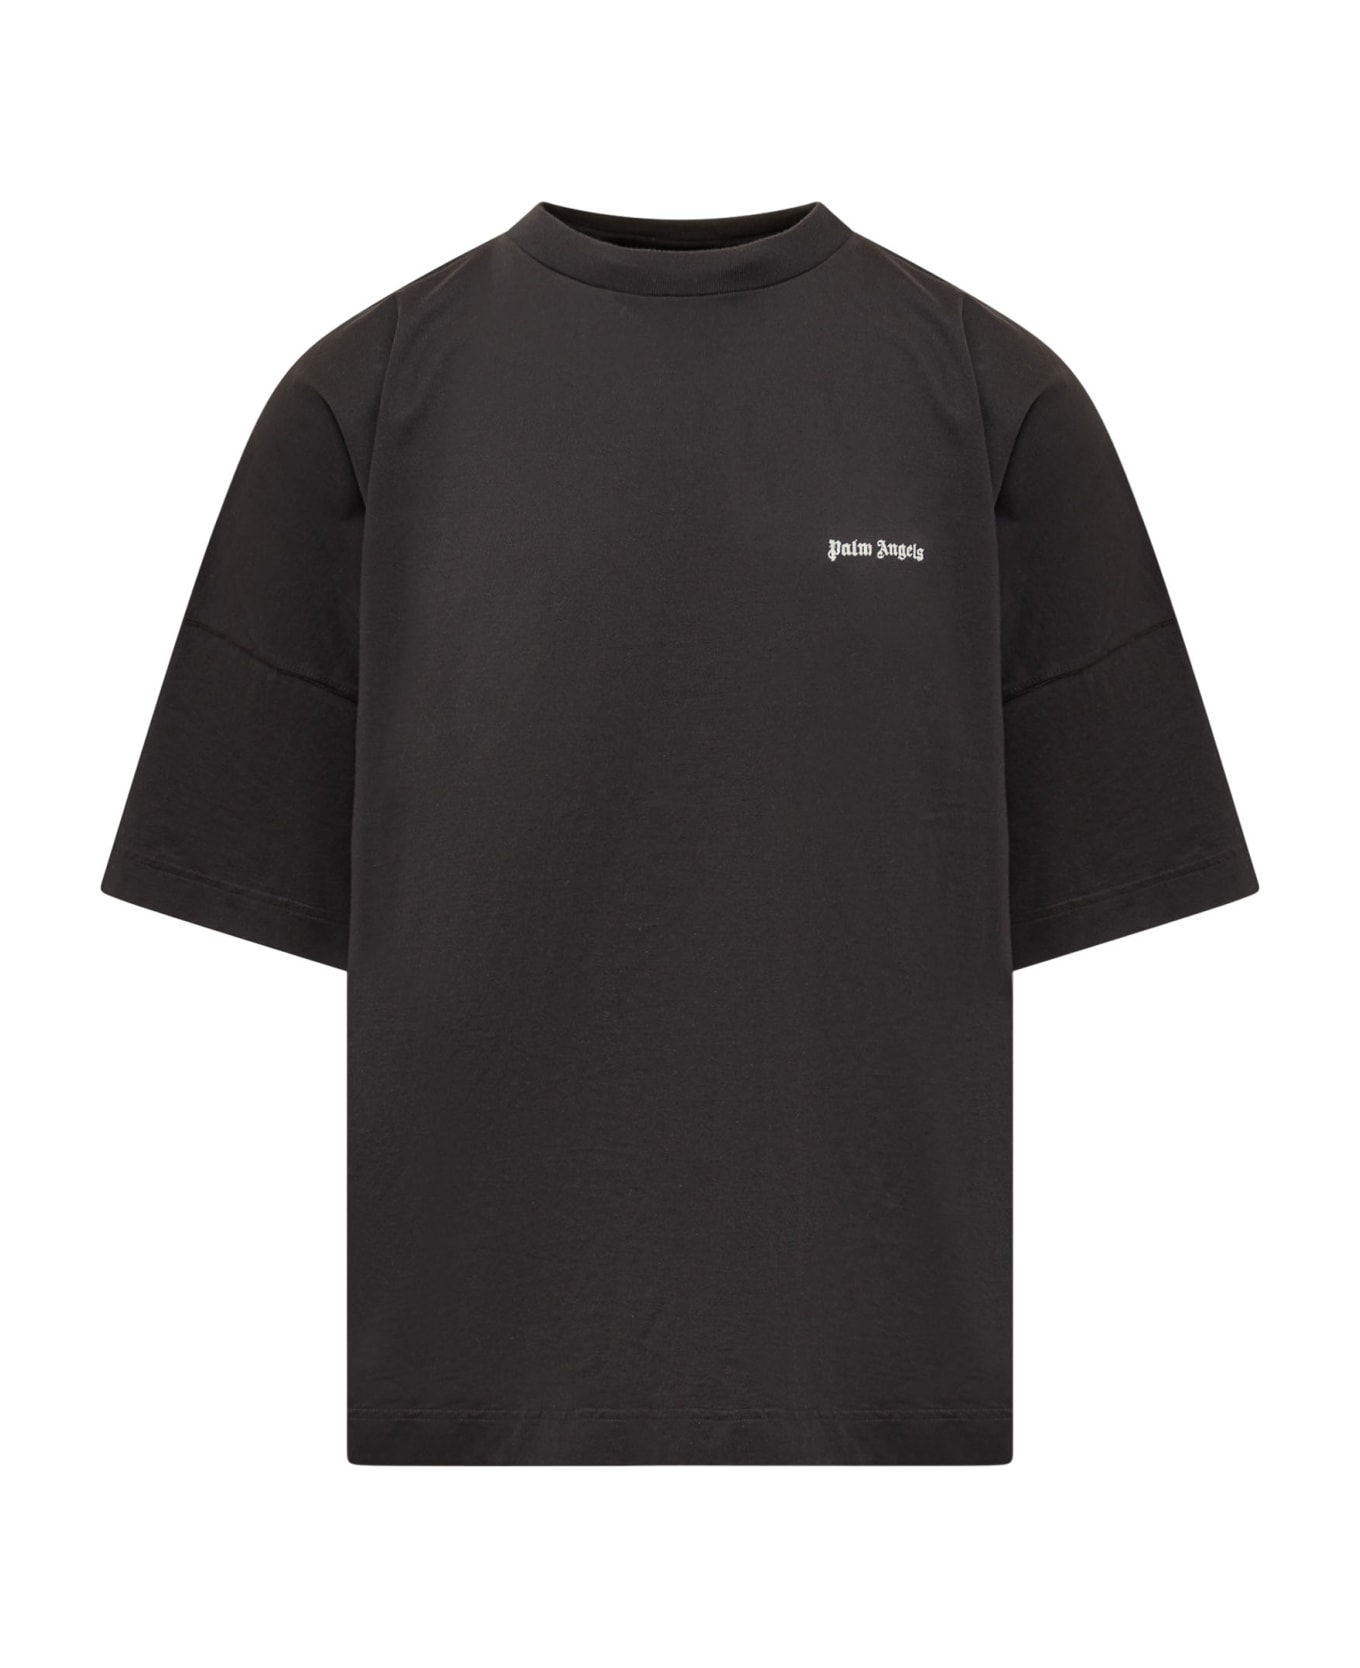 Palm Angels Black Cotton T-shirt - BLACK WHITE シャツ